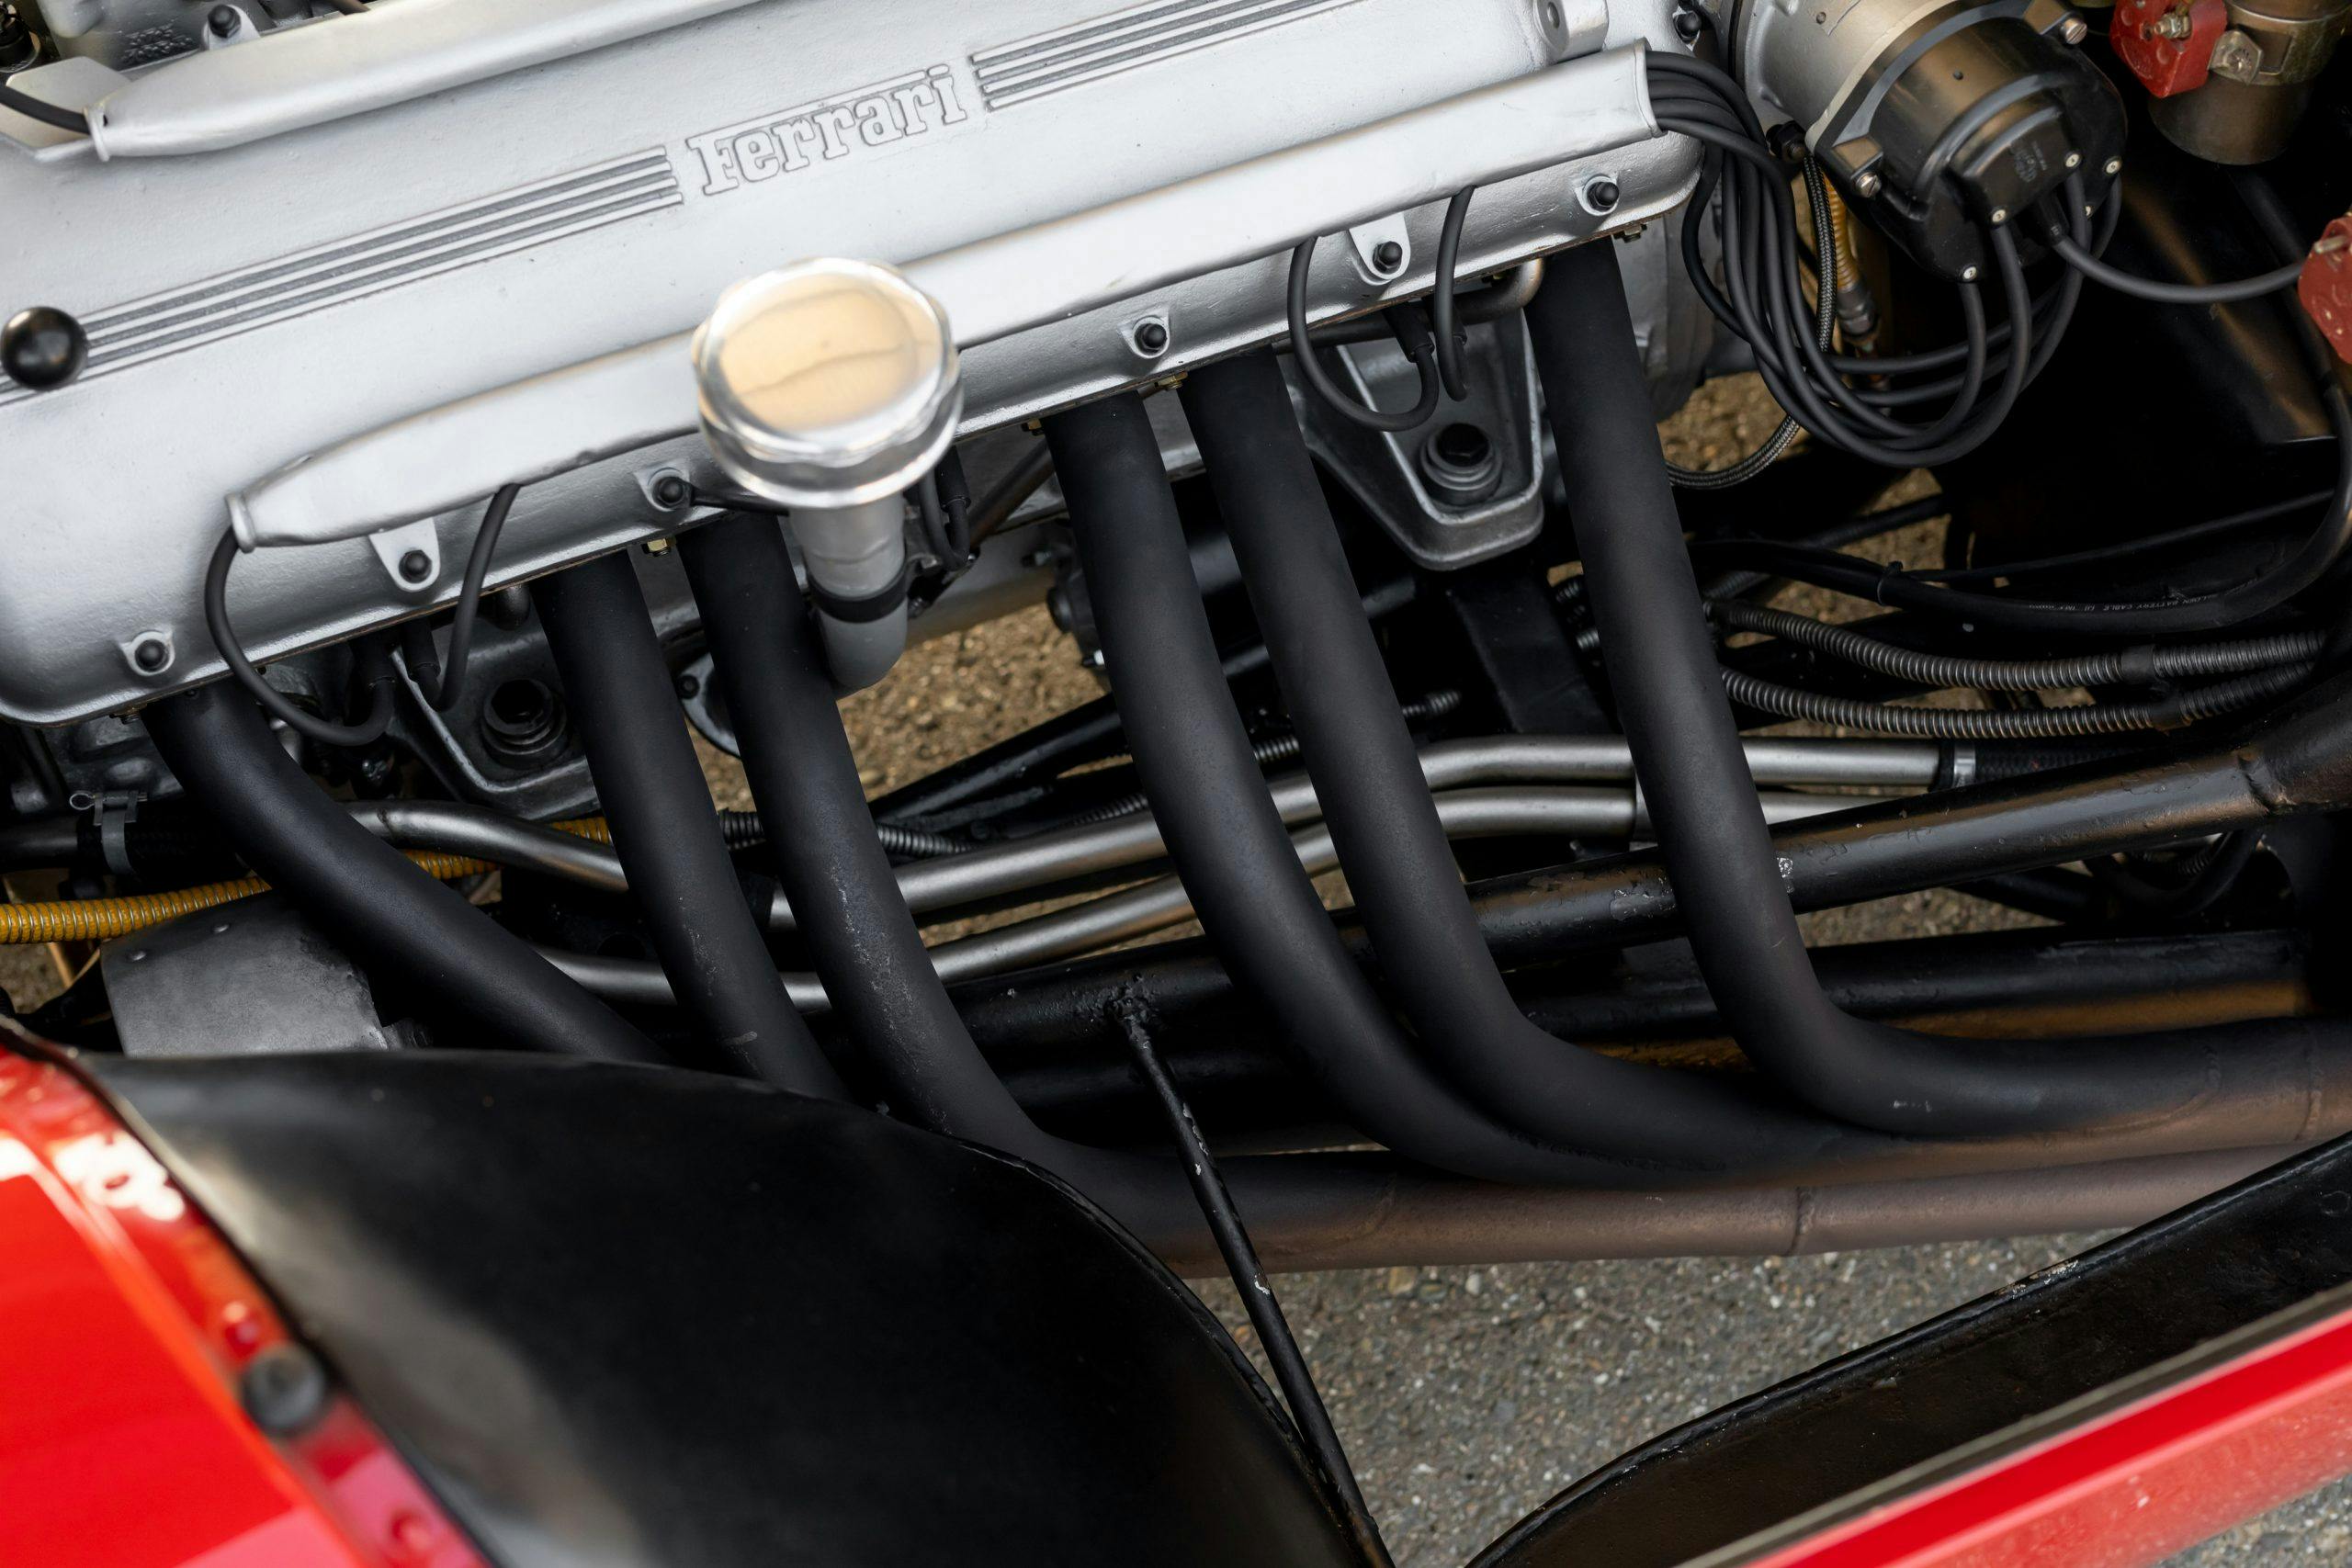 1955 Ferrari 410 Sport Spider exhaust pipes